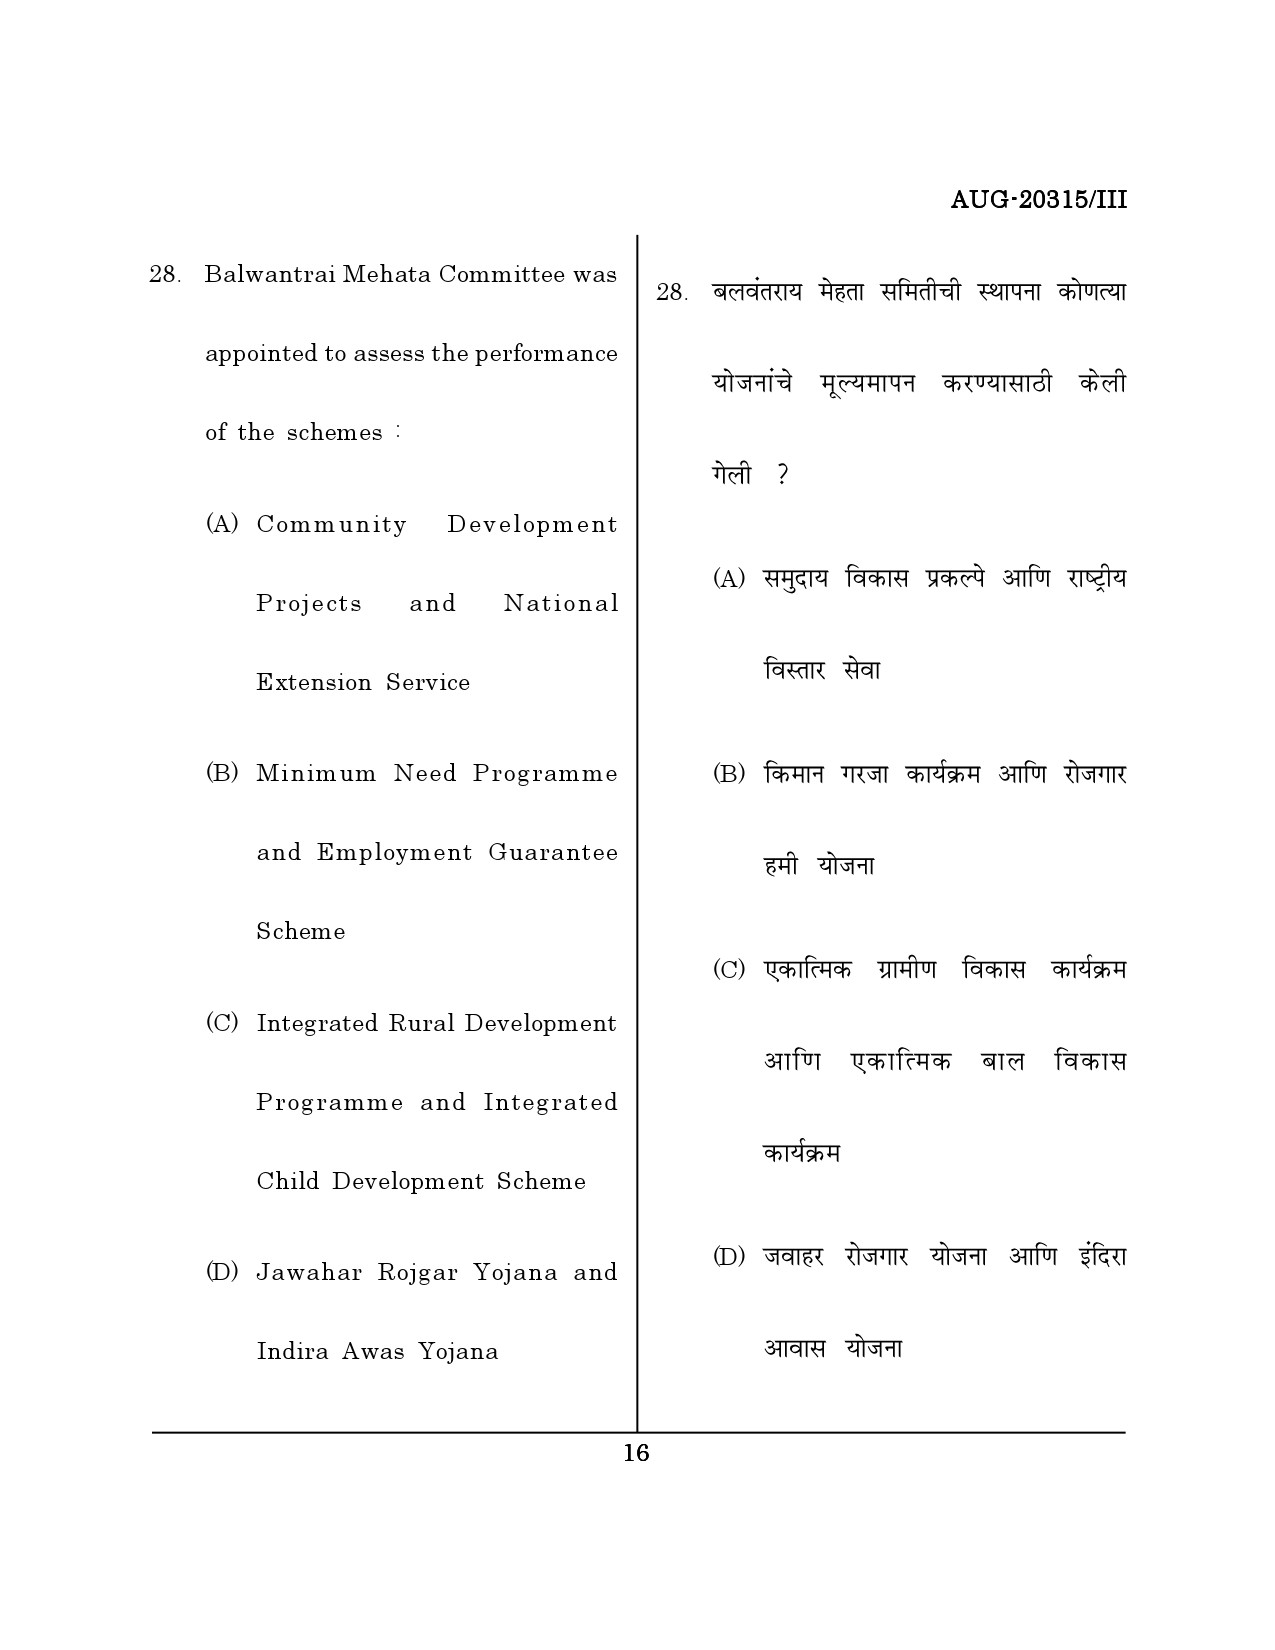 Maharashtra SET Social Work Question Paper III August 2015 15